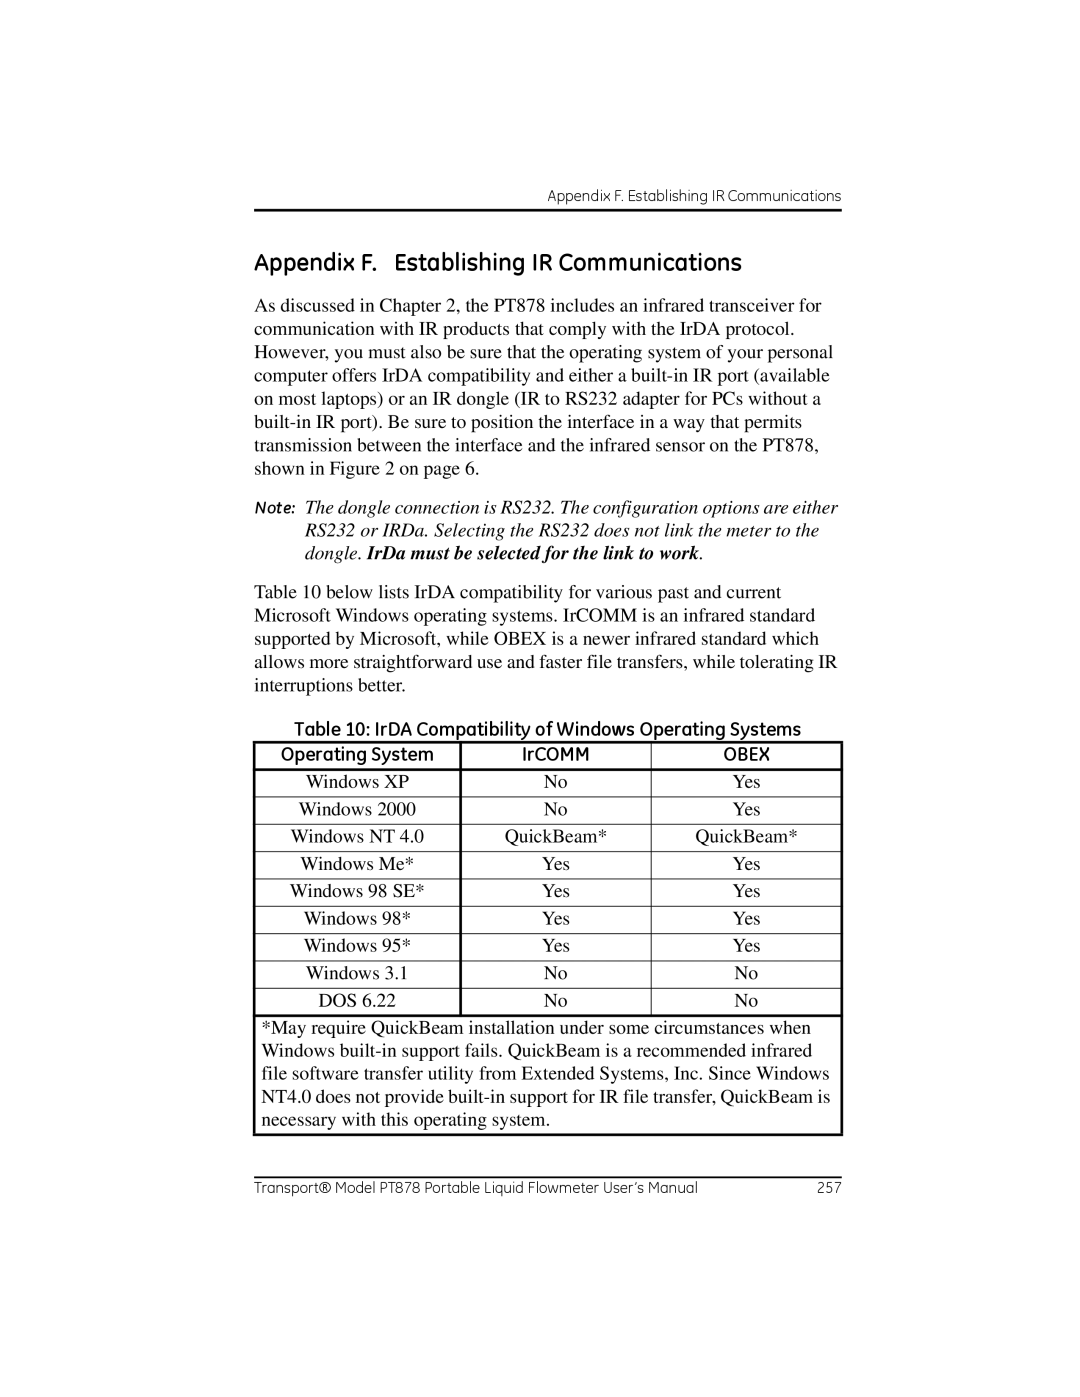 GE PT878 user manual Appendix F. Establishing IR Communications, IrDA Compatibility of Windows Operating Systems 